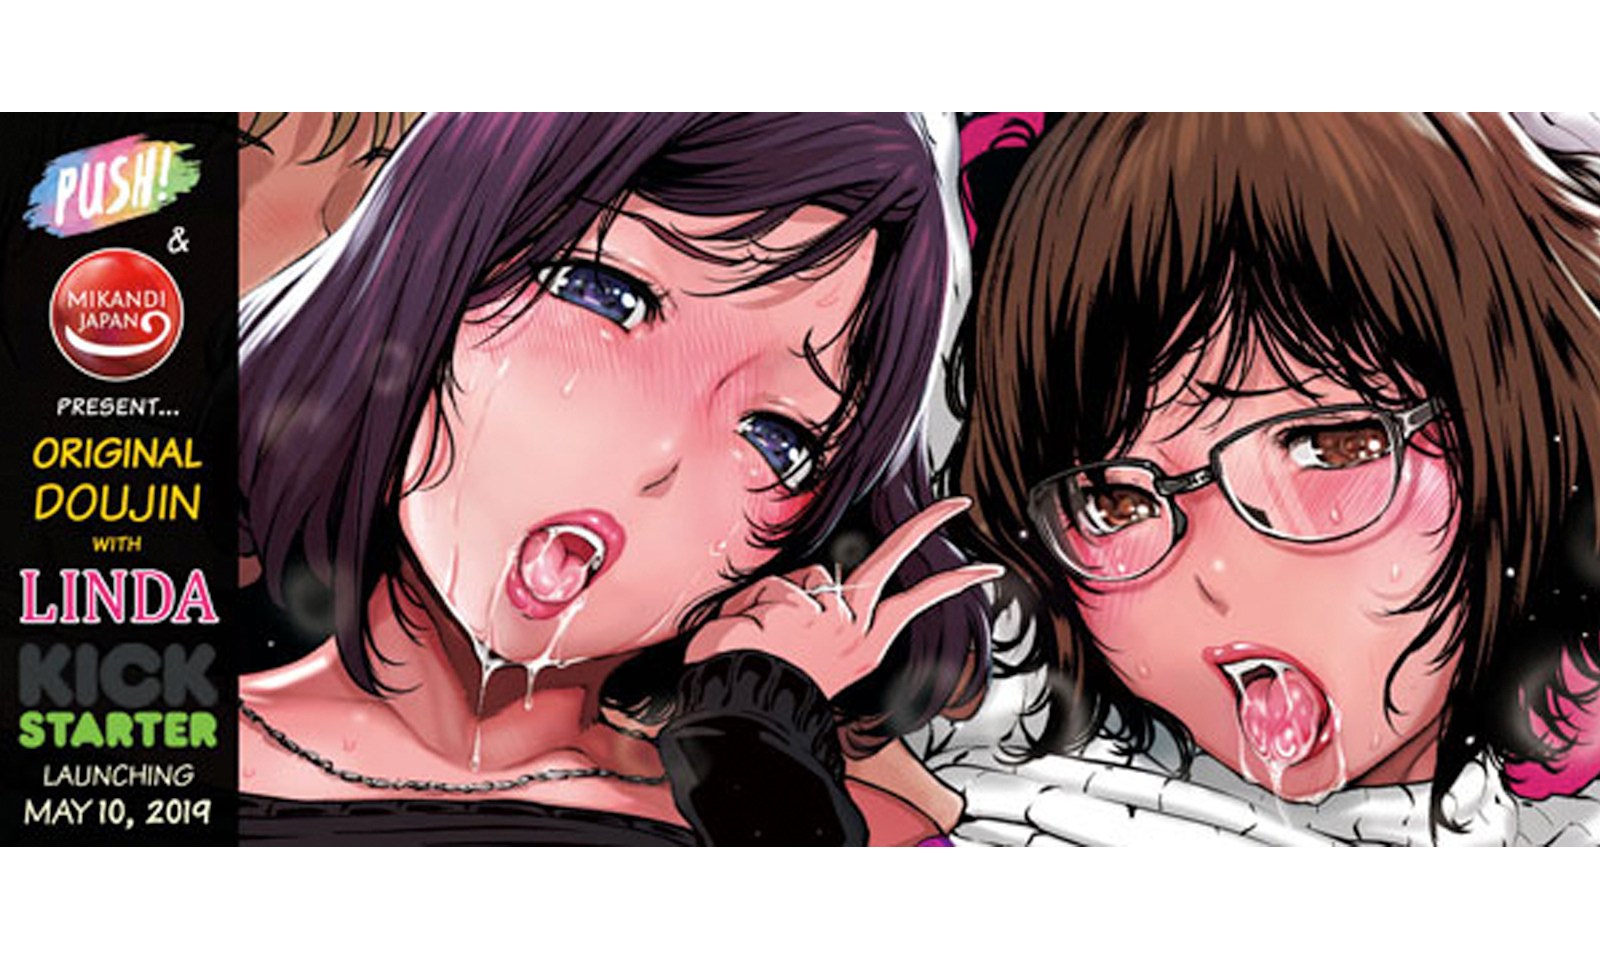 MiKandi, PUSH! Bringing Japanese Artist LINDA’s Erotic Manga West